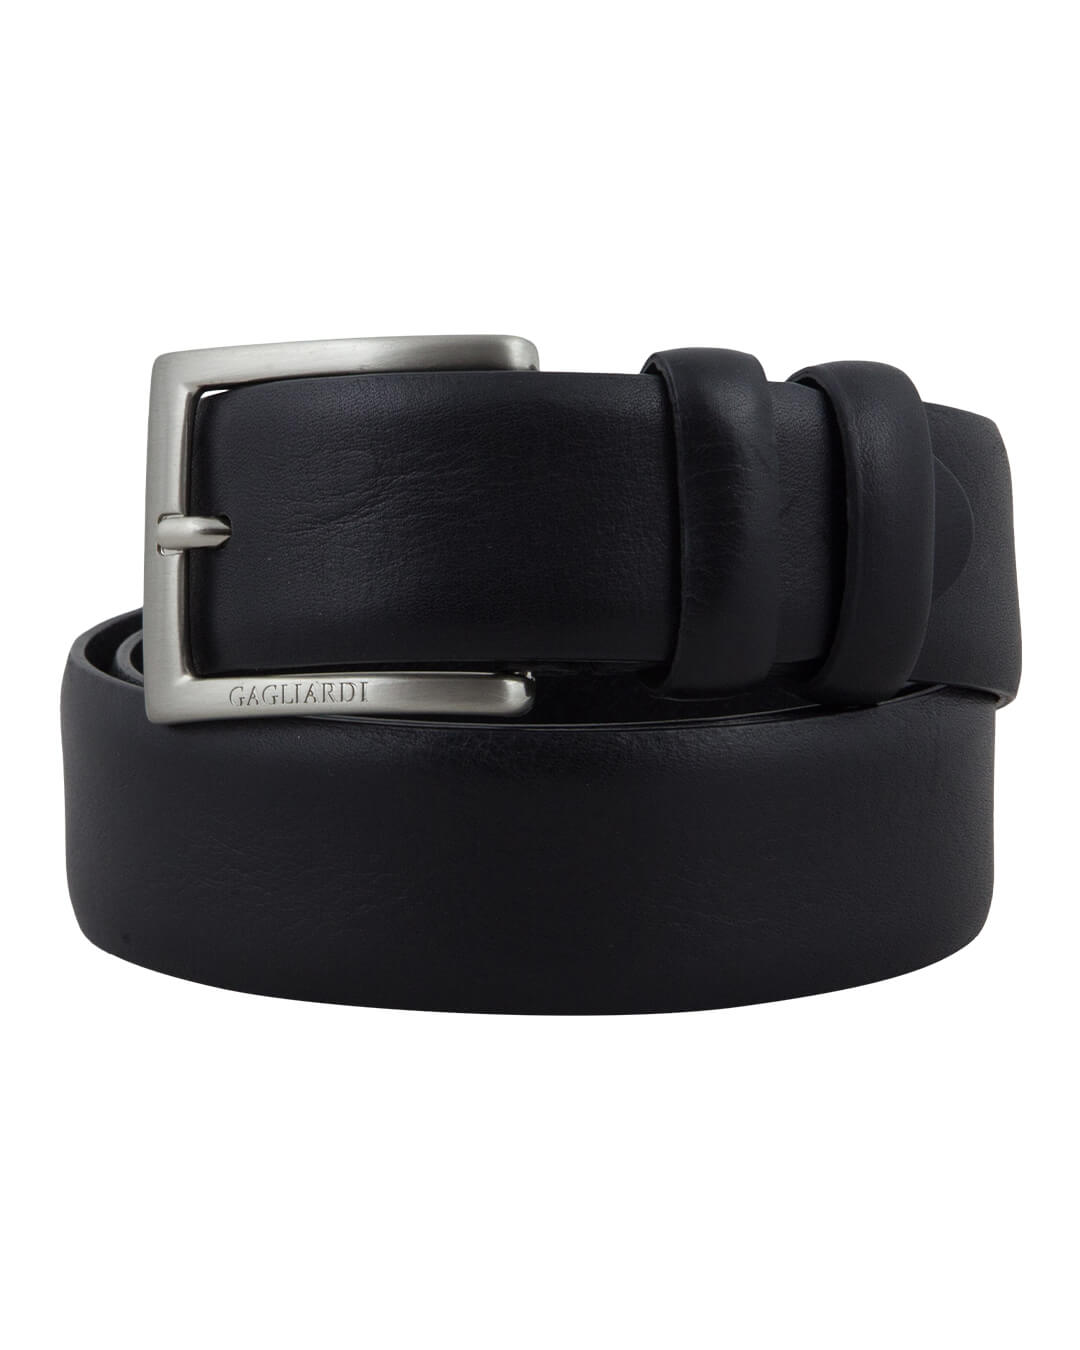 Gagliardi Belts Gagliardi Black Leather Belt